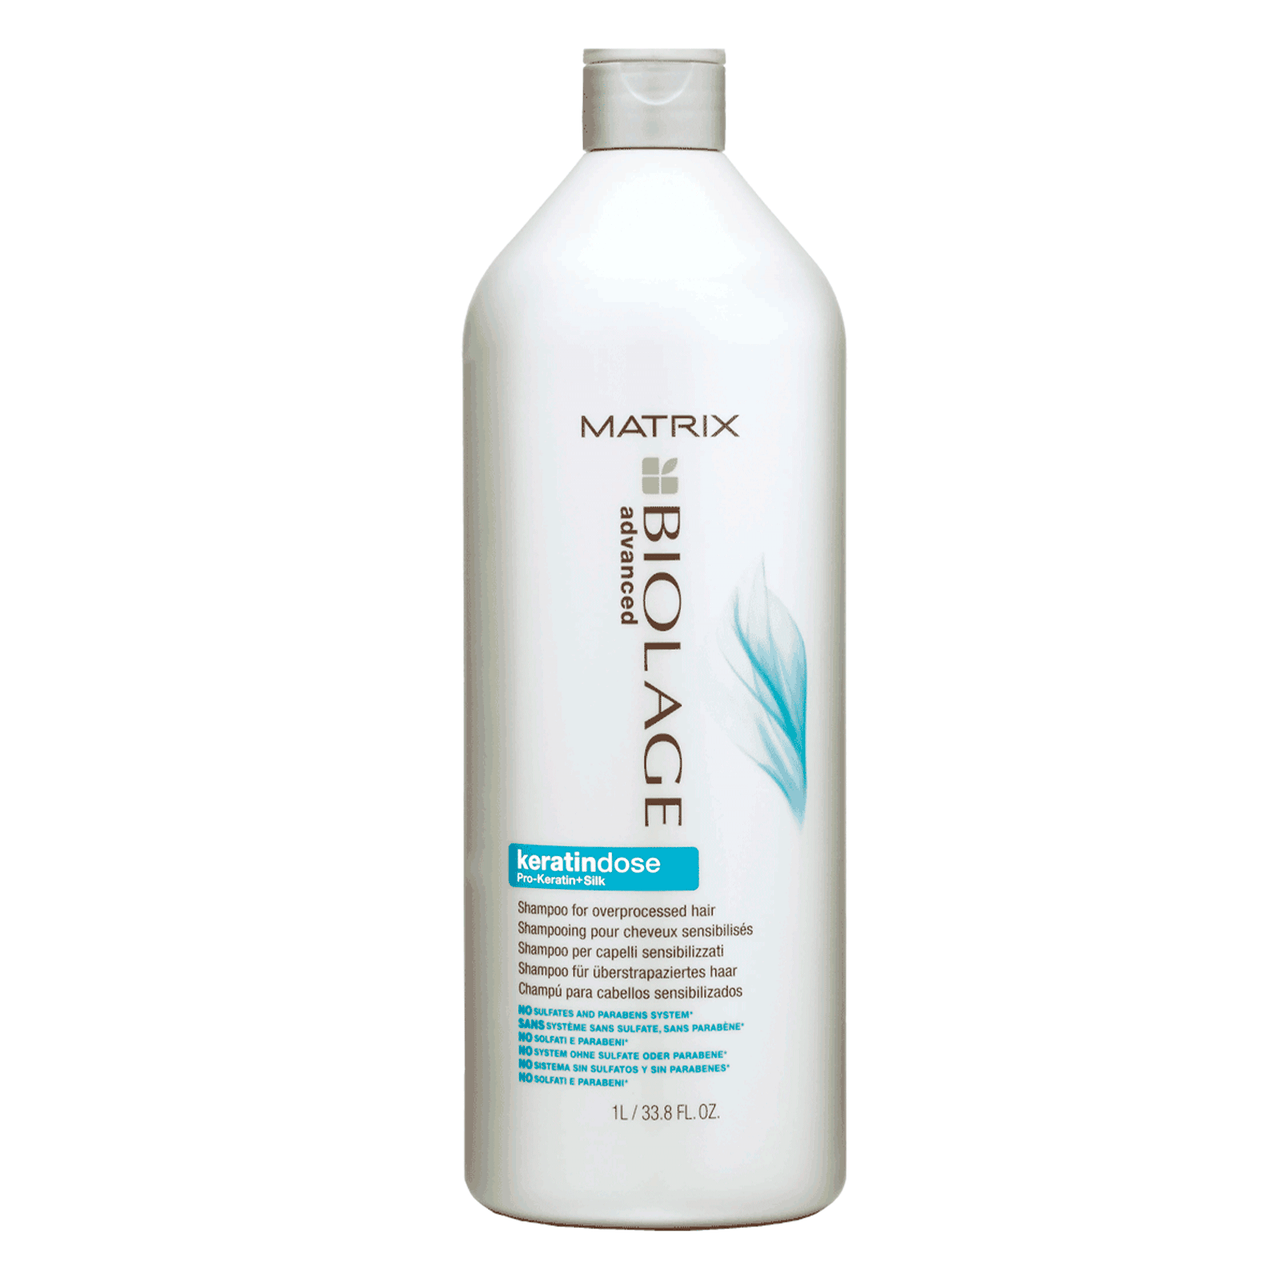 Matrix Keratin Dose Shampoo 1 Liter